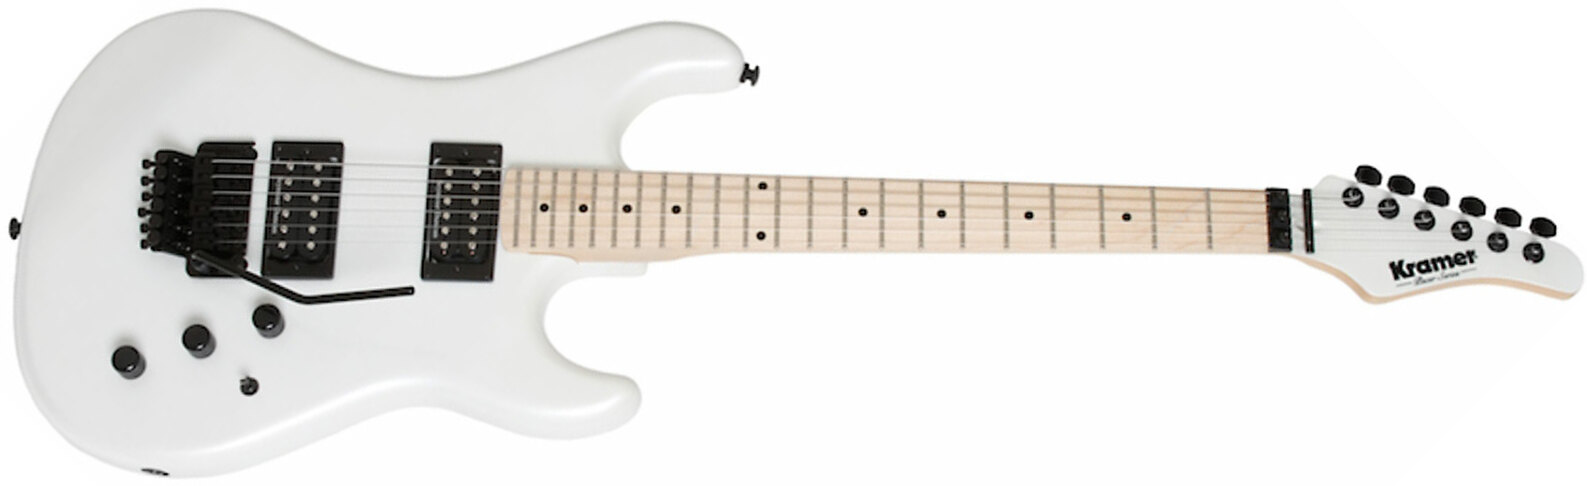 Kramer Pacer Vintage 2h Seymour Duncan  Fr Mn - Pearl White - Str shape electric guitar - Main picture